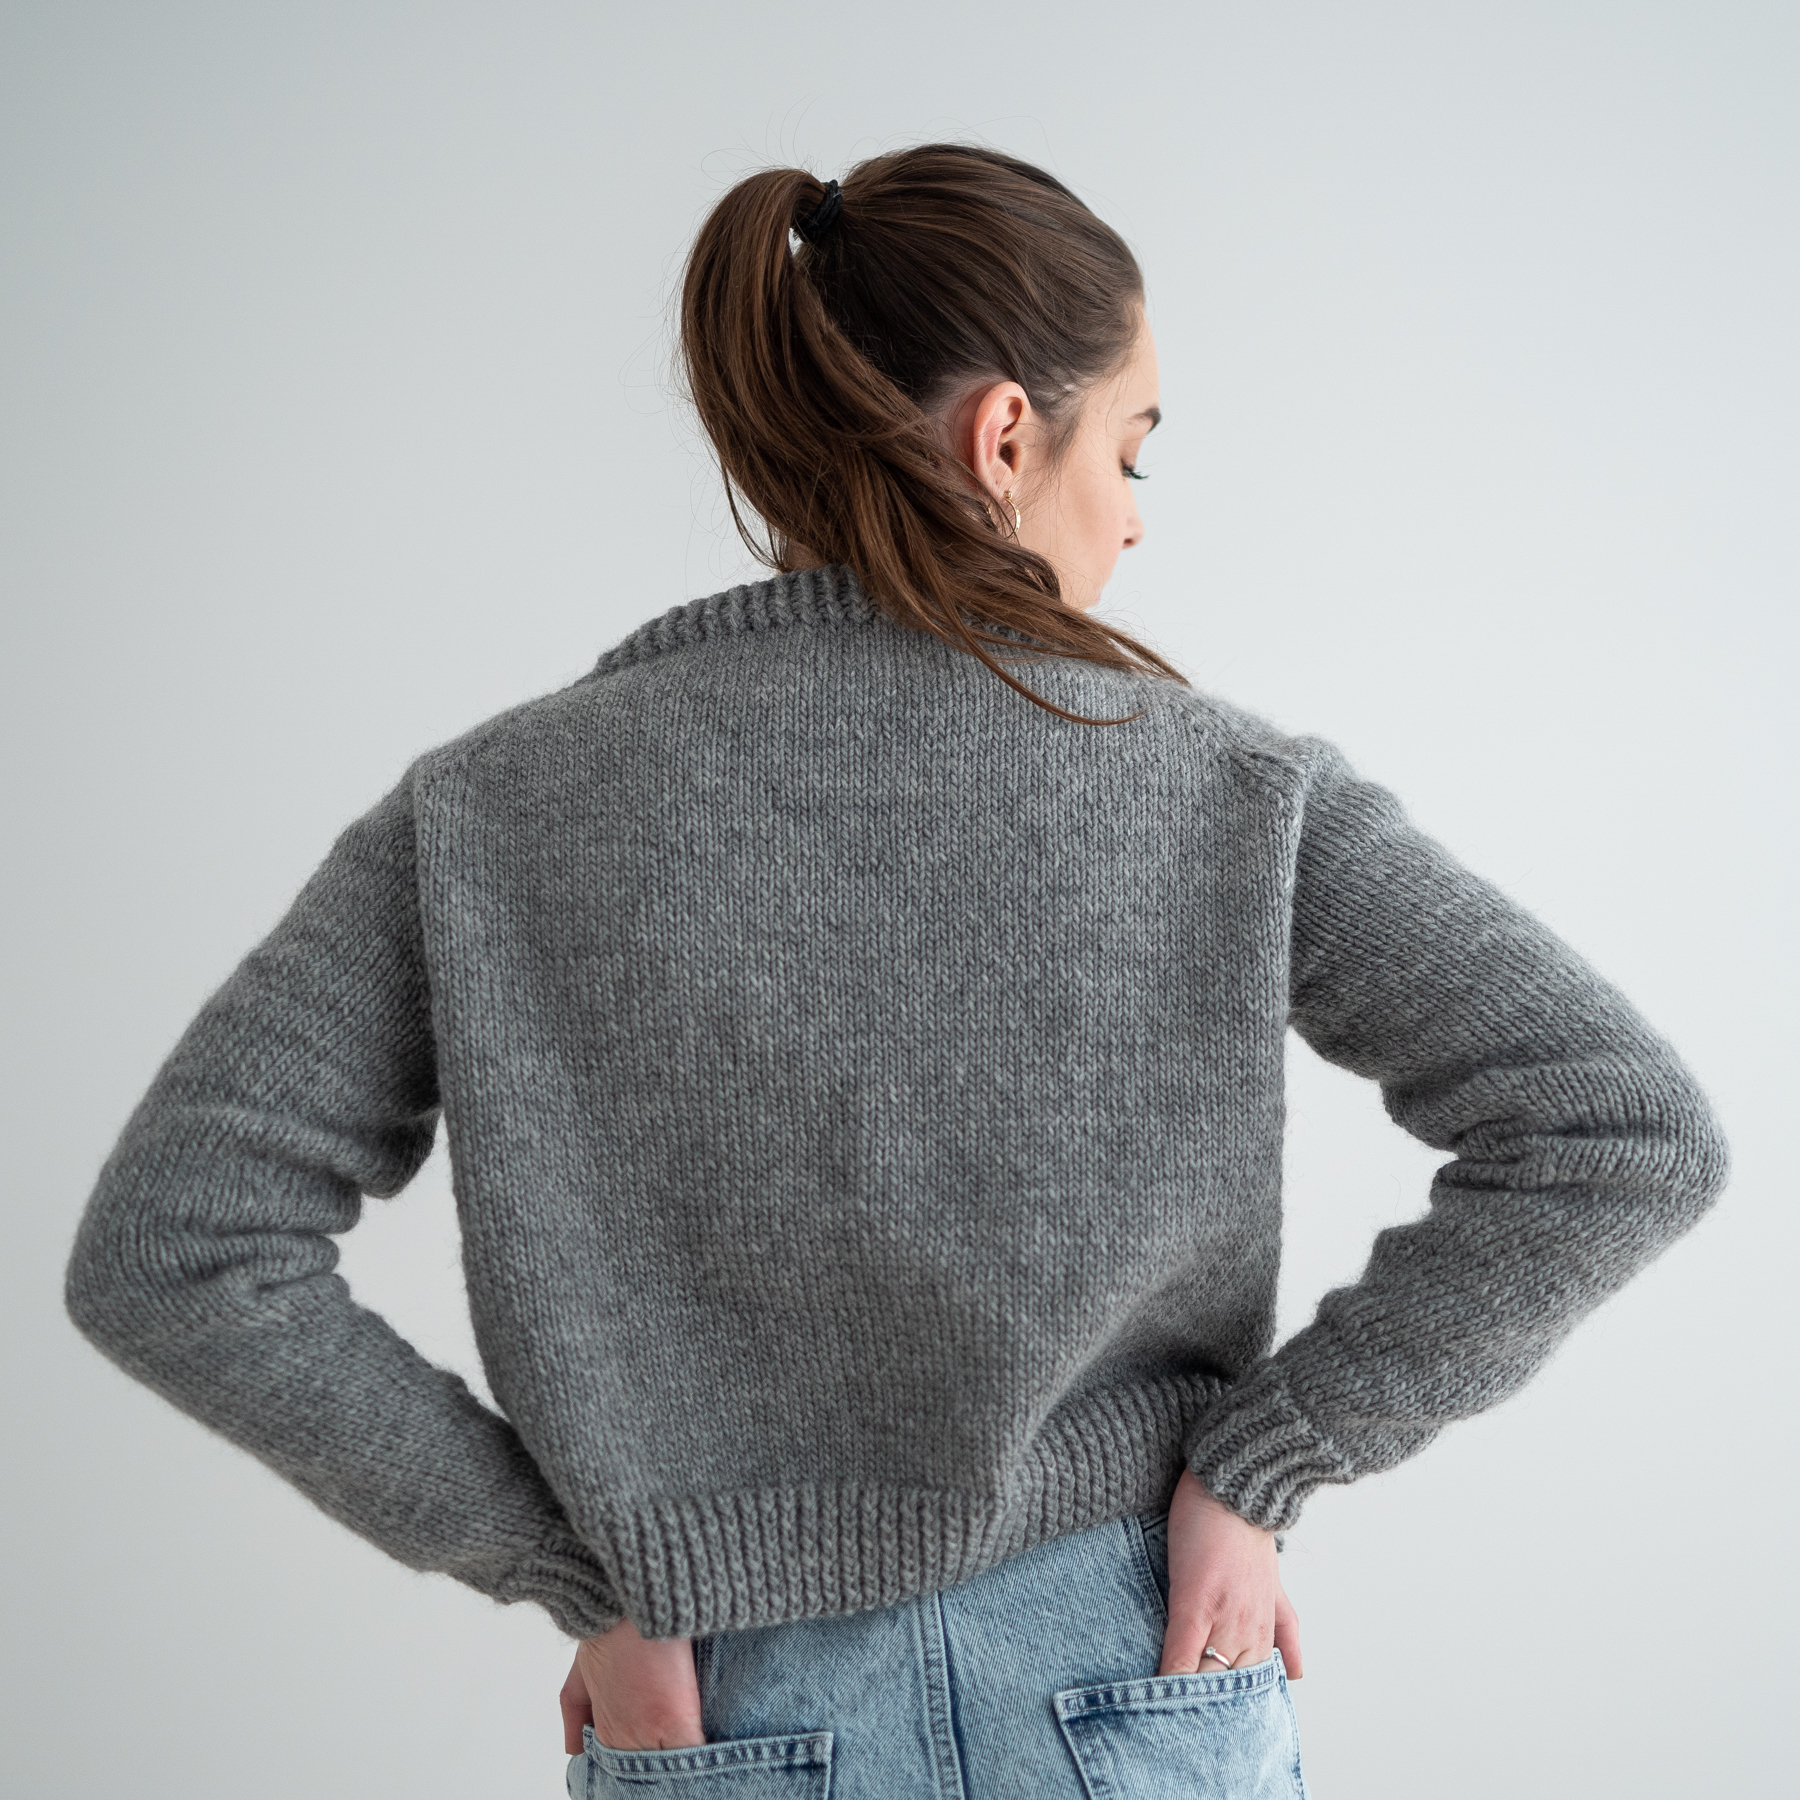  - Aha sweater | Cool sweater women knitting pattern - by HipKnitShop - 21/11/2019